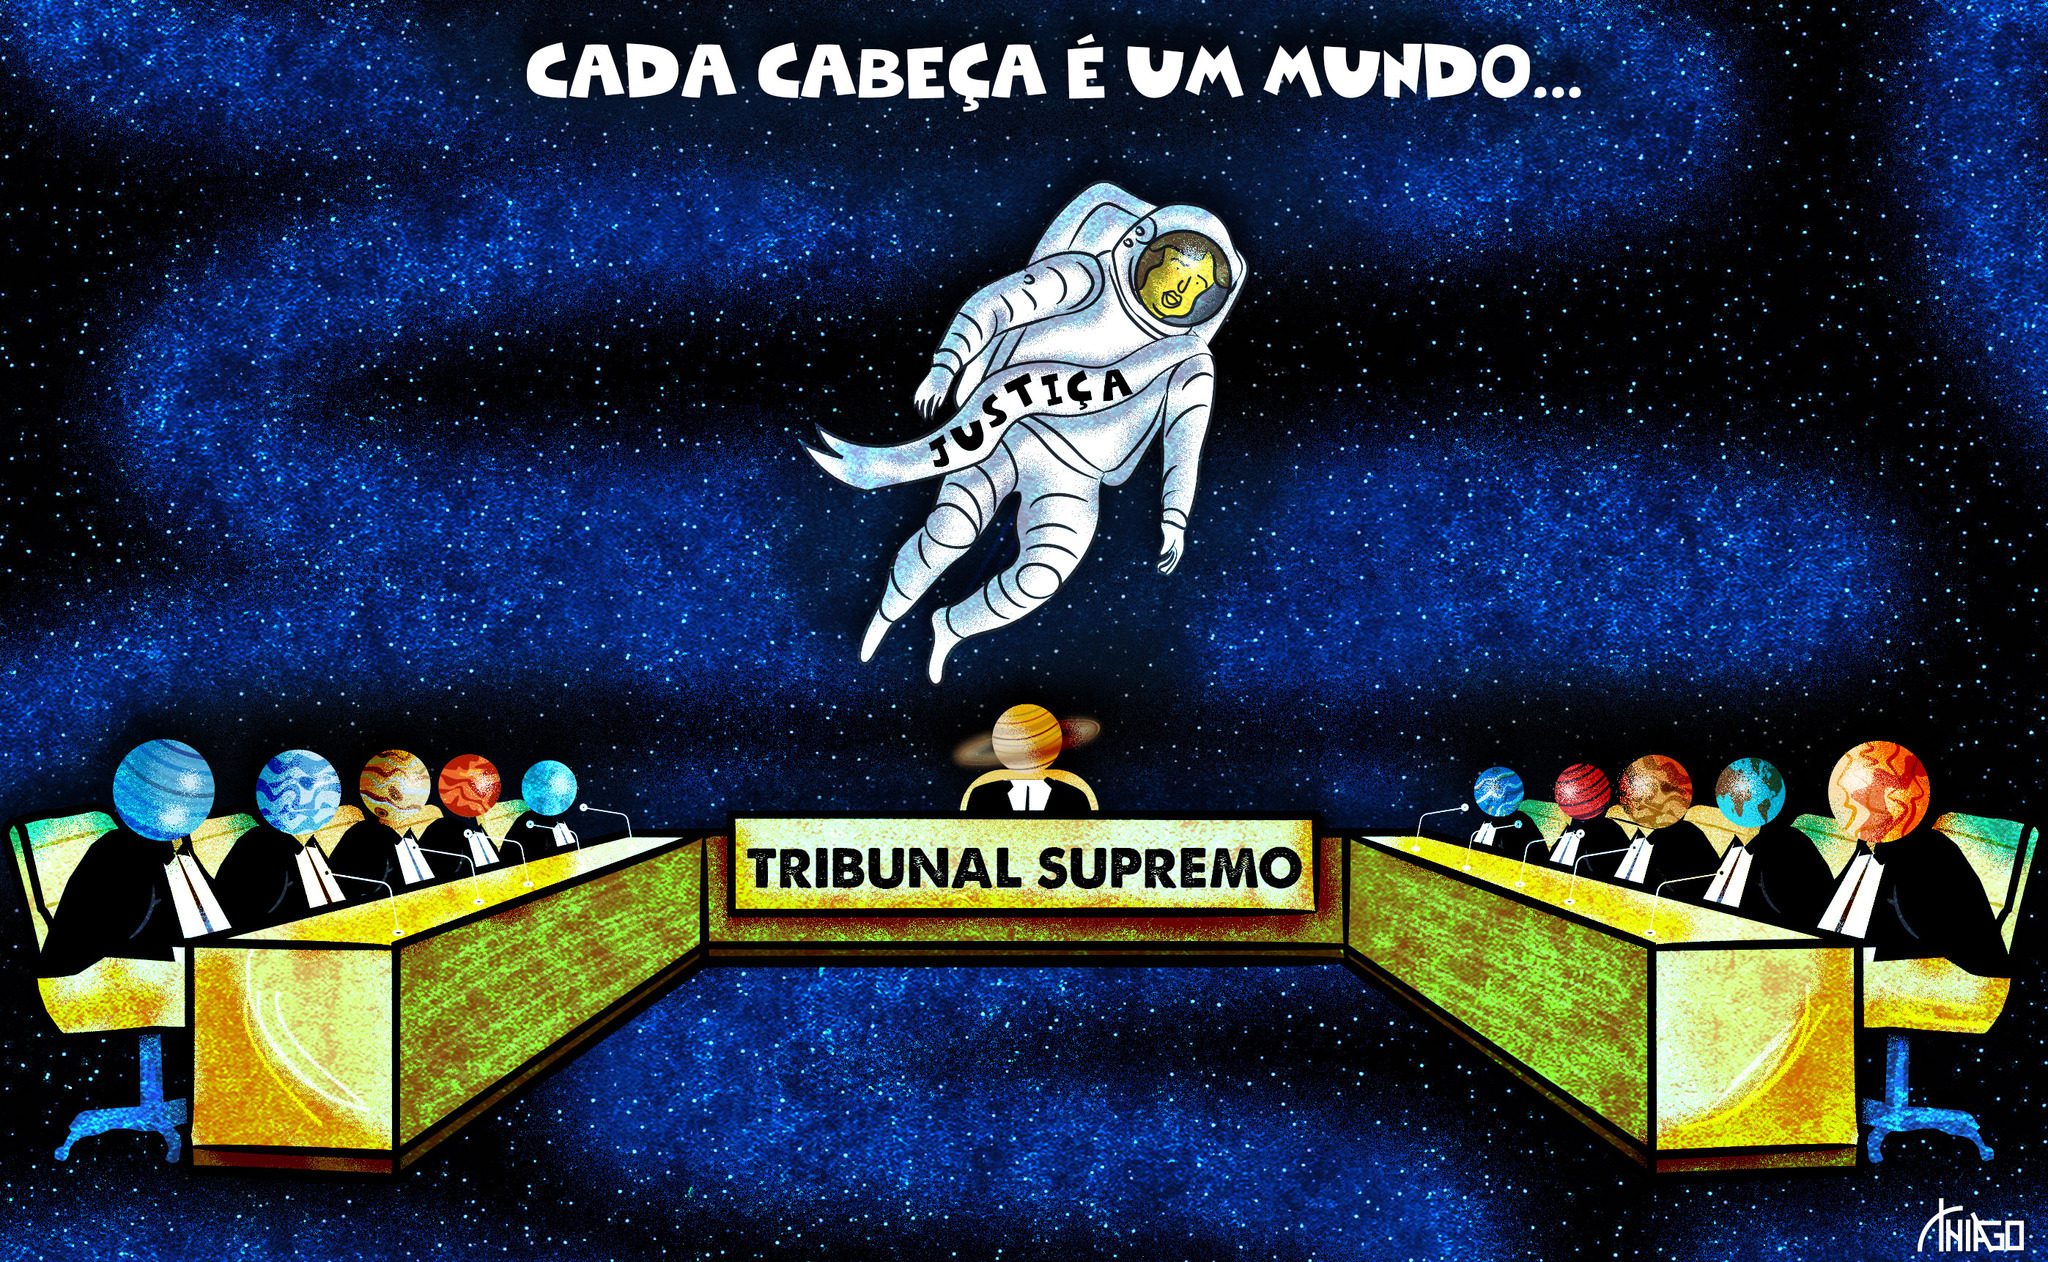 Jornal do Commercio on X: "#Charge de Thiago Lucas (@thiagochargista)  #justiça #stf #tse #brasil https://t.co/uMVLxJFlNE" / X